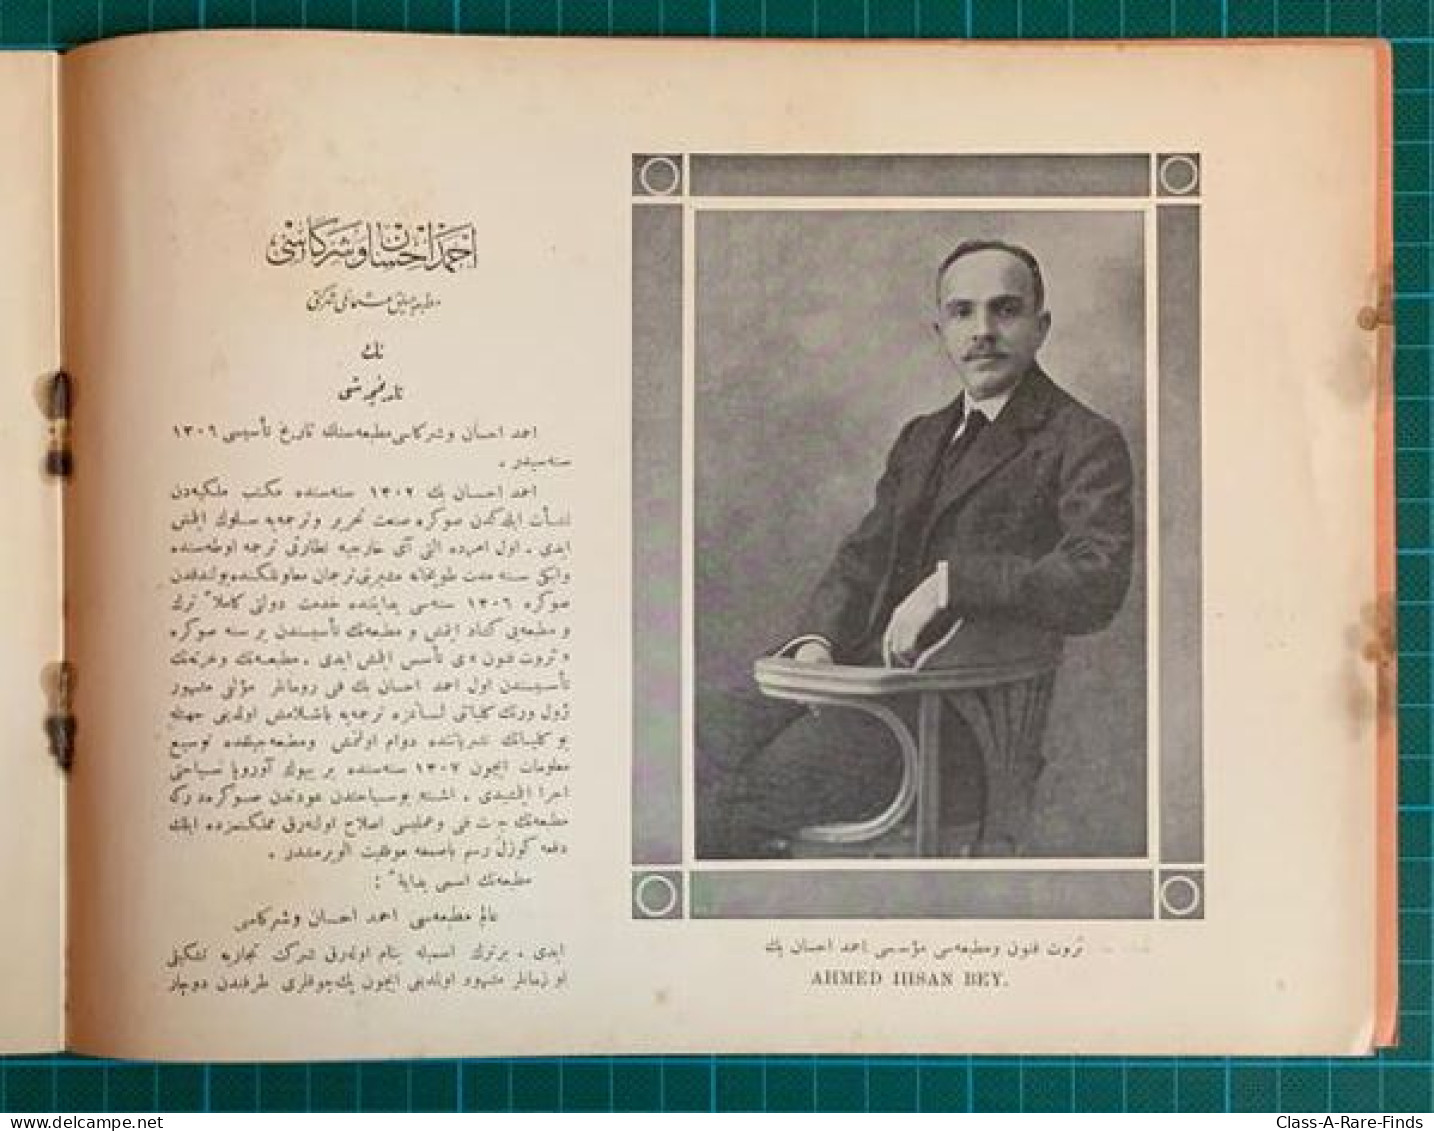 1912, OTTOMAN TURKEY ISTANBUL / AHMED IHSAN PRINTING HOUSE / SERVET-I FUNUN / SERVETIFUNOUN MAGAZINE / BOOKLET - Romane